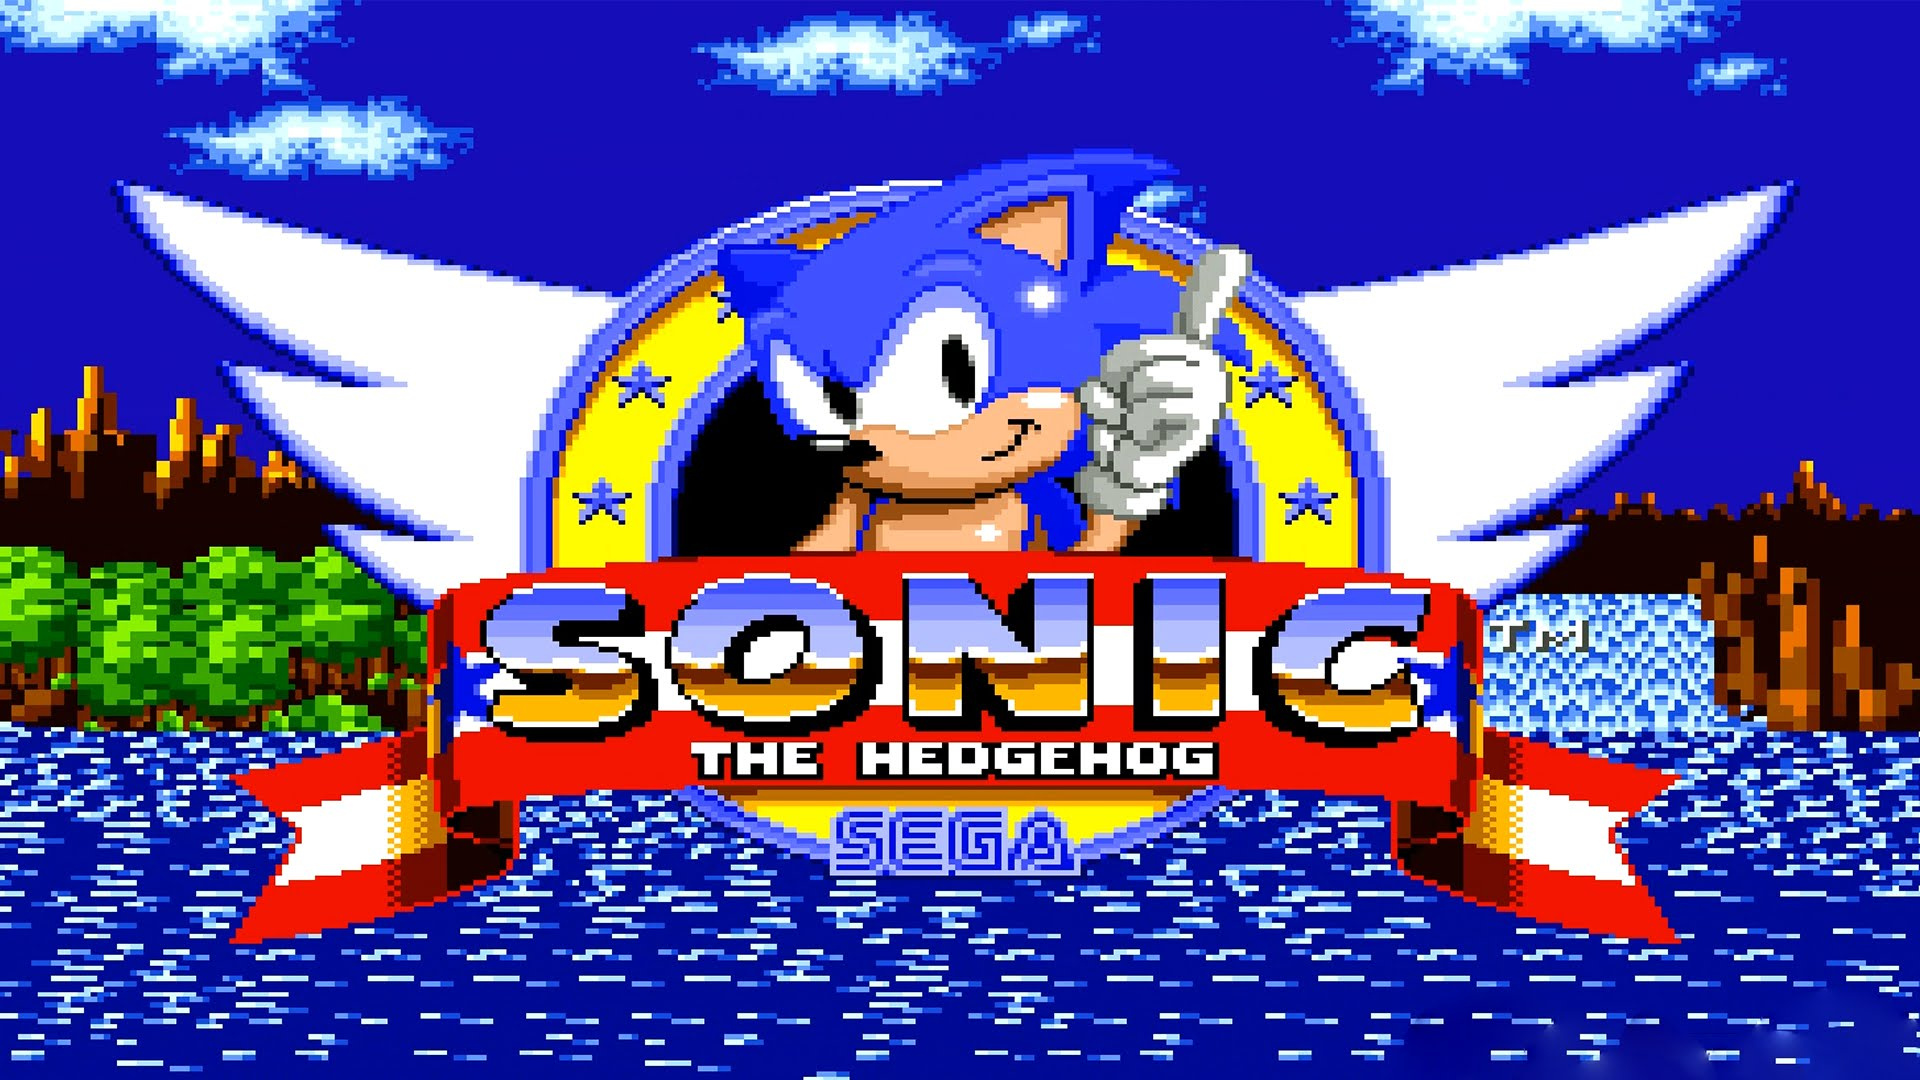 sonic the hedgehog playstation 4